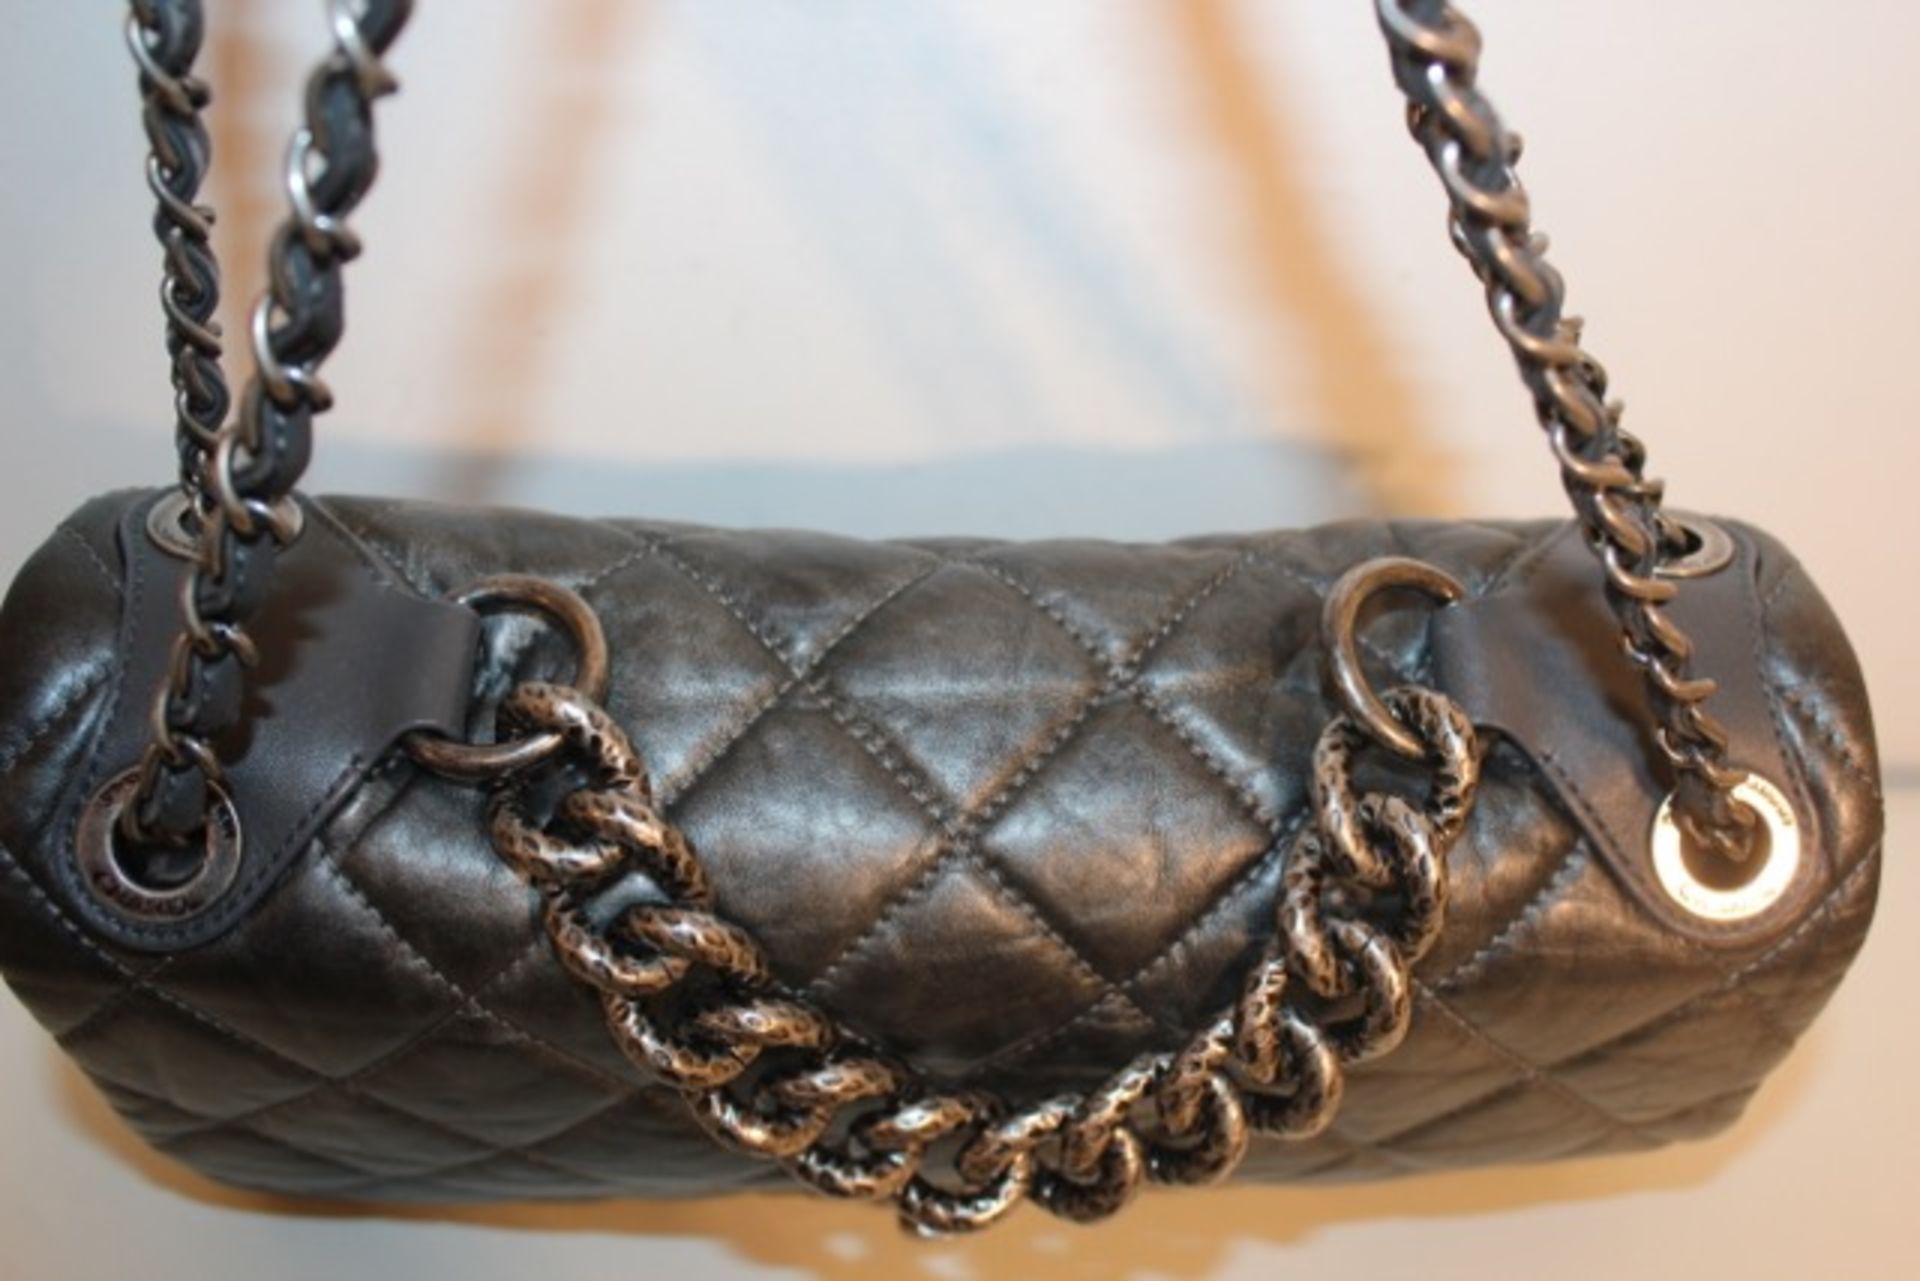 CHANEL Pondichery Flap Bag Metallic Grey with Ruthenium Hardware - Image 3 of 17